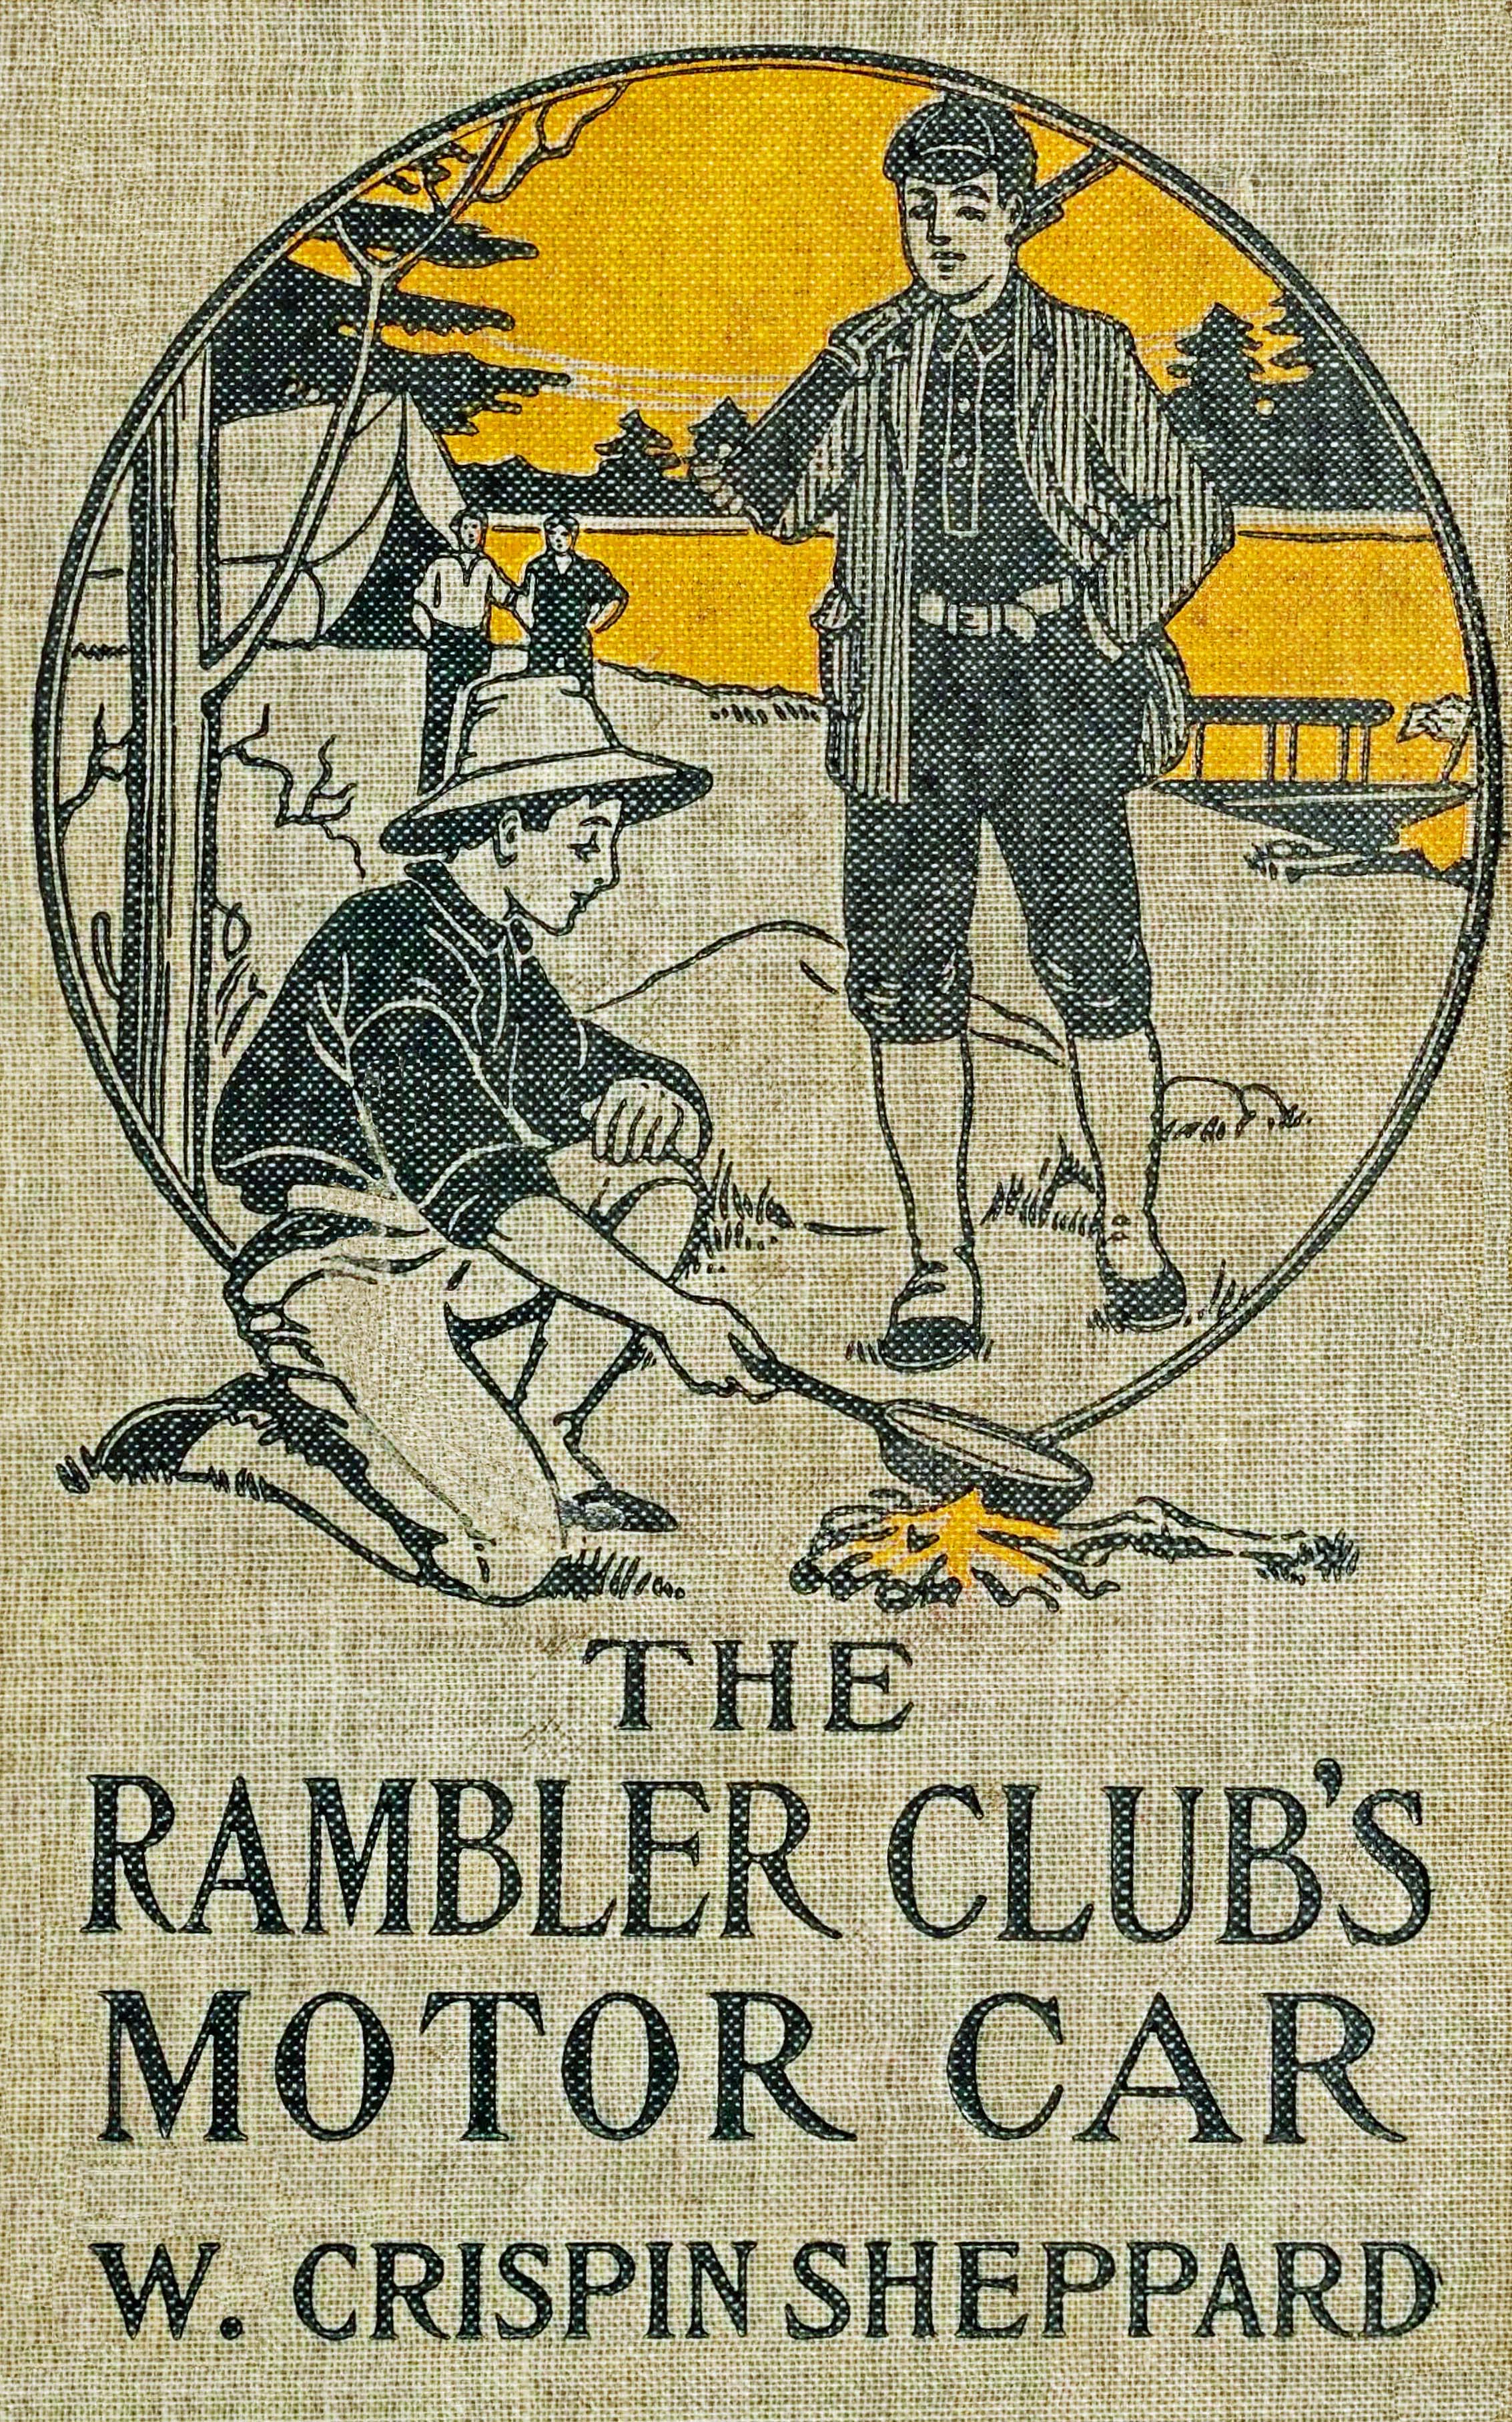 The Rambler Club's motor car